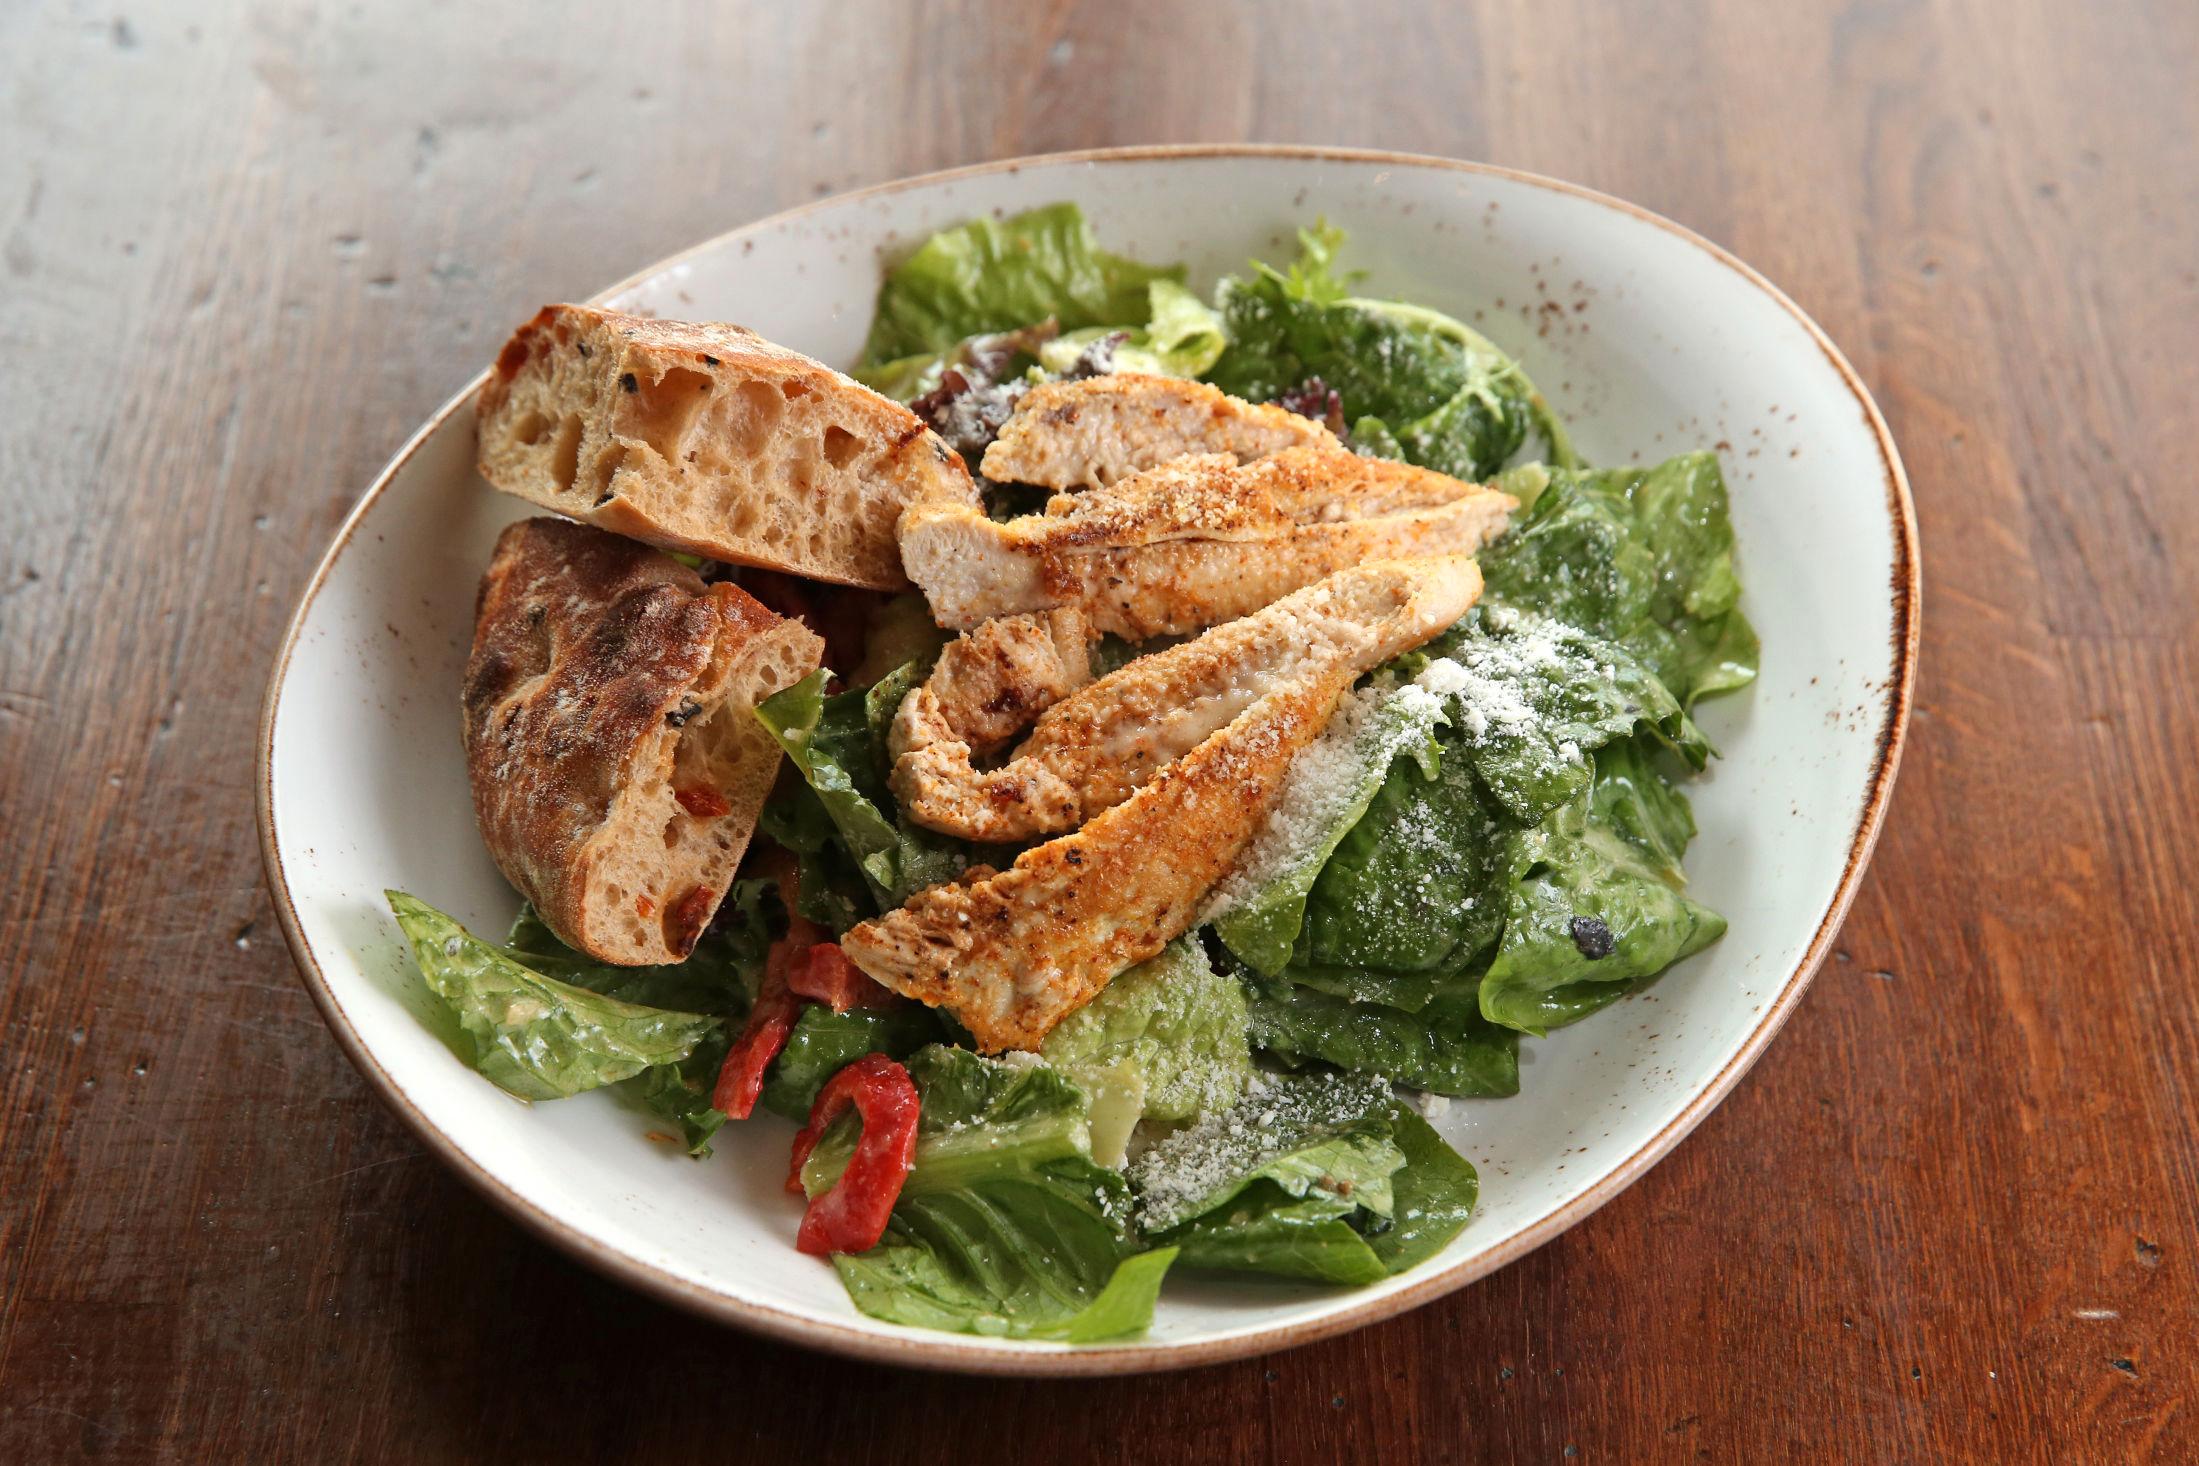 GREI SALAT: Caesar-salaten var helt grei, mener VGs restaurantanmelder. Foto: Trond Solberg/VG